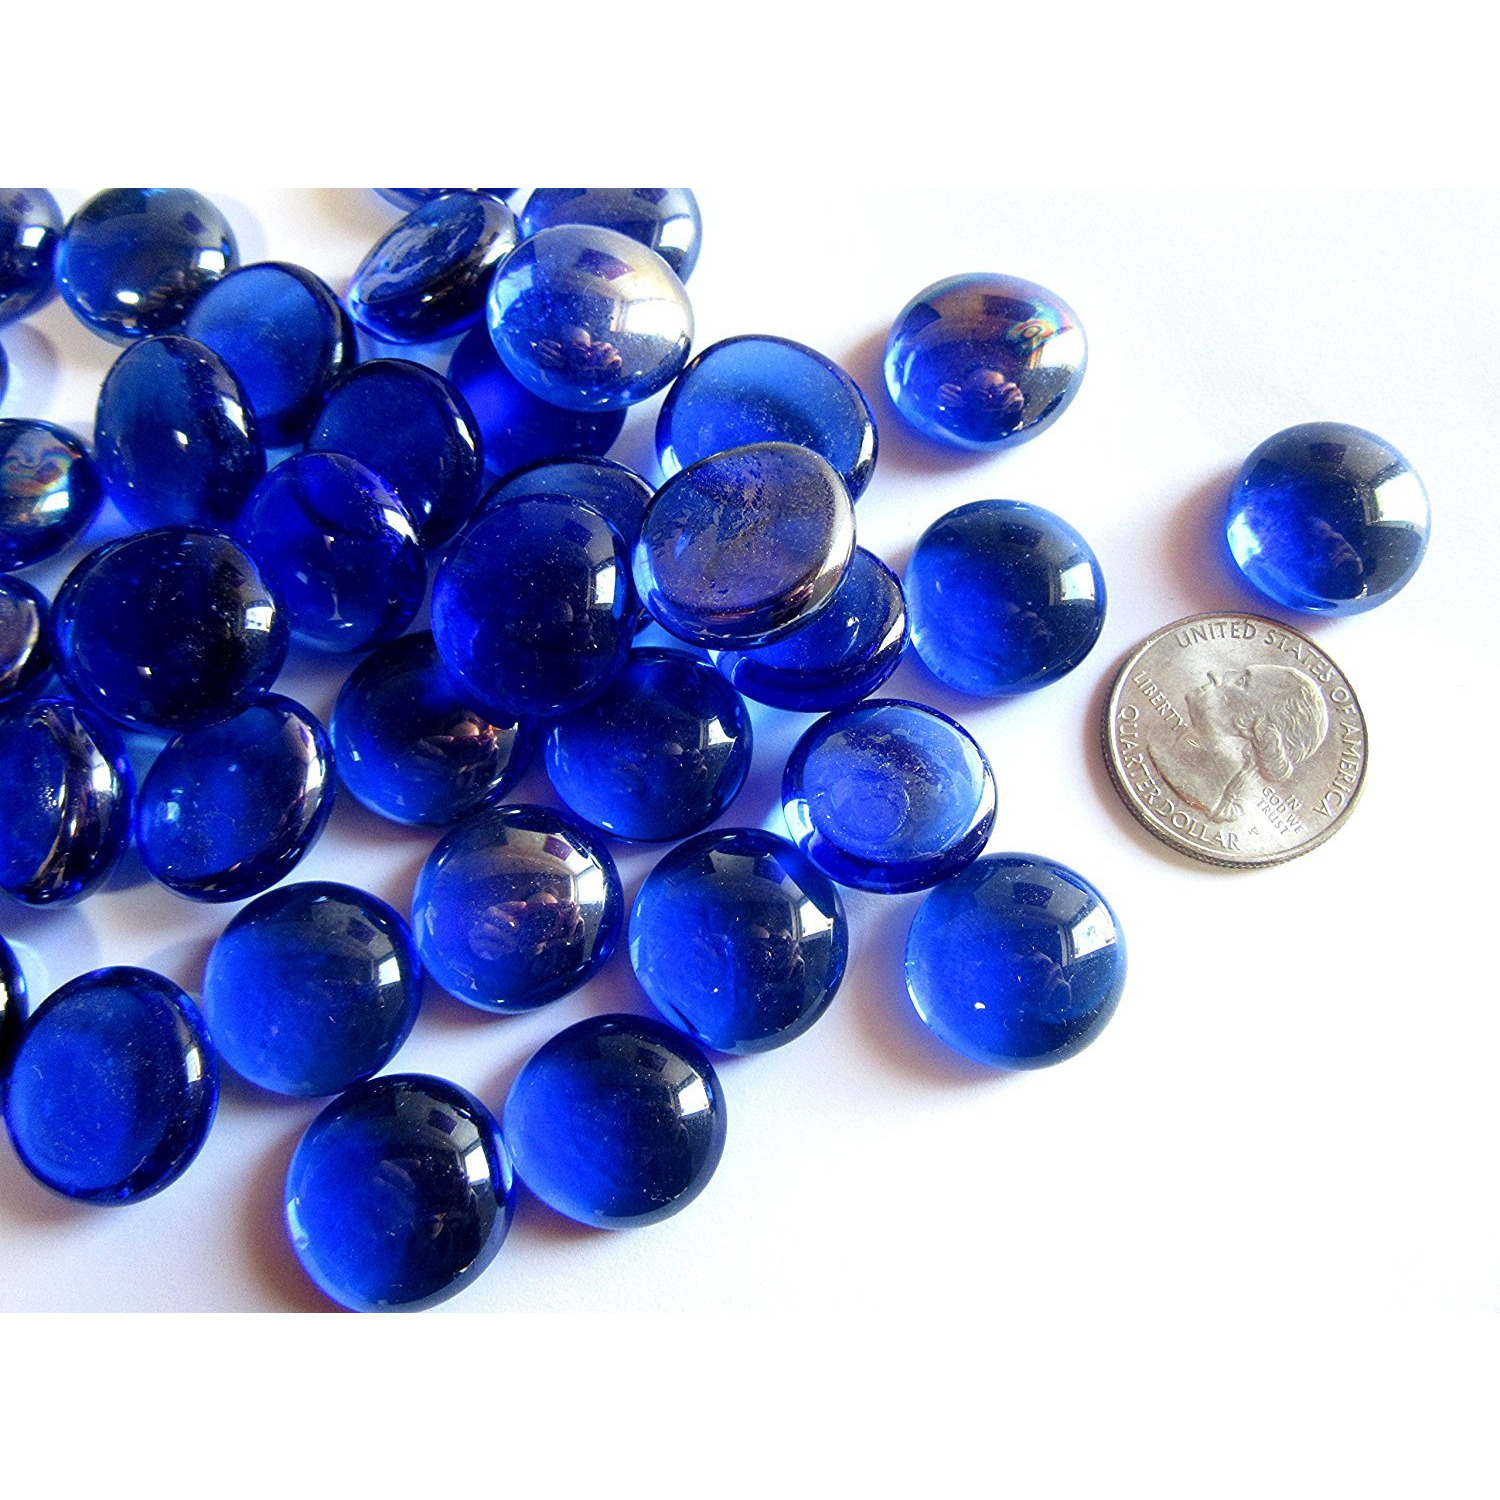 Light Blue Glass Round Marbles Beads Gemstone Vase Filler for Aquarium